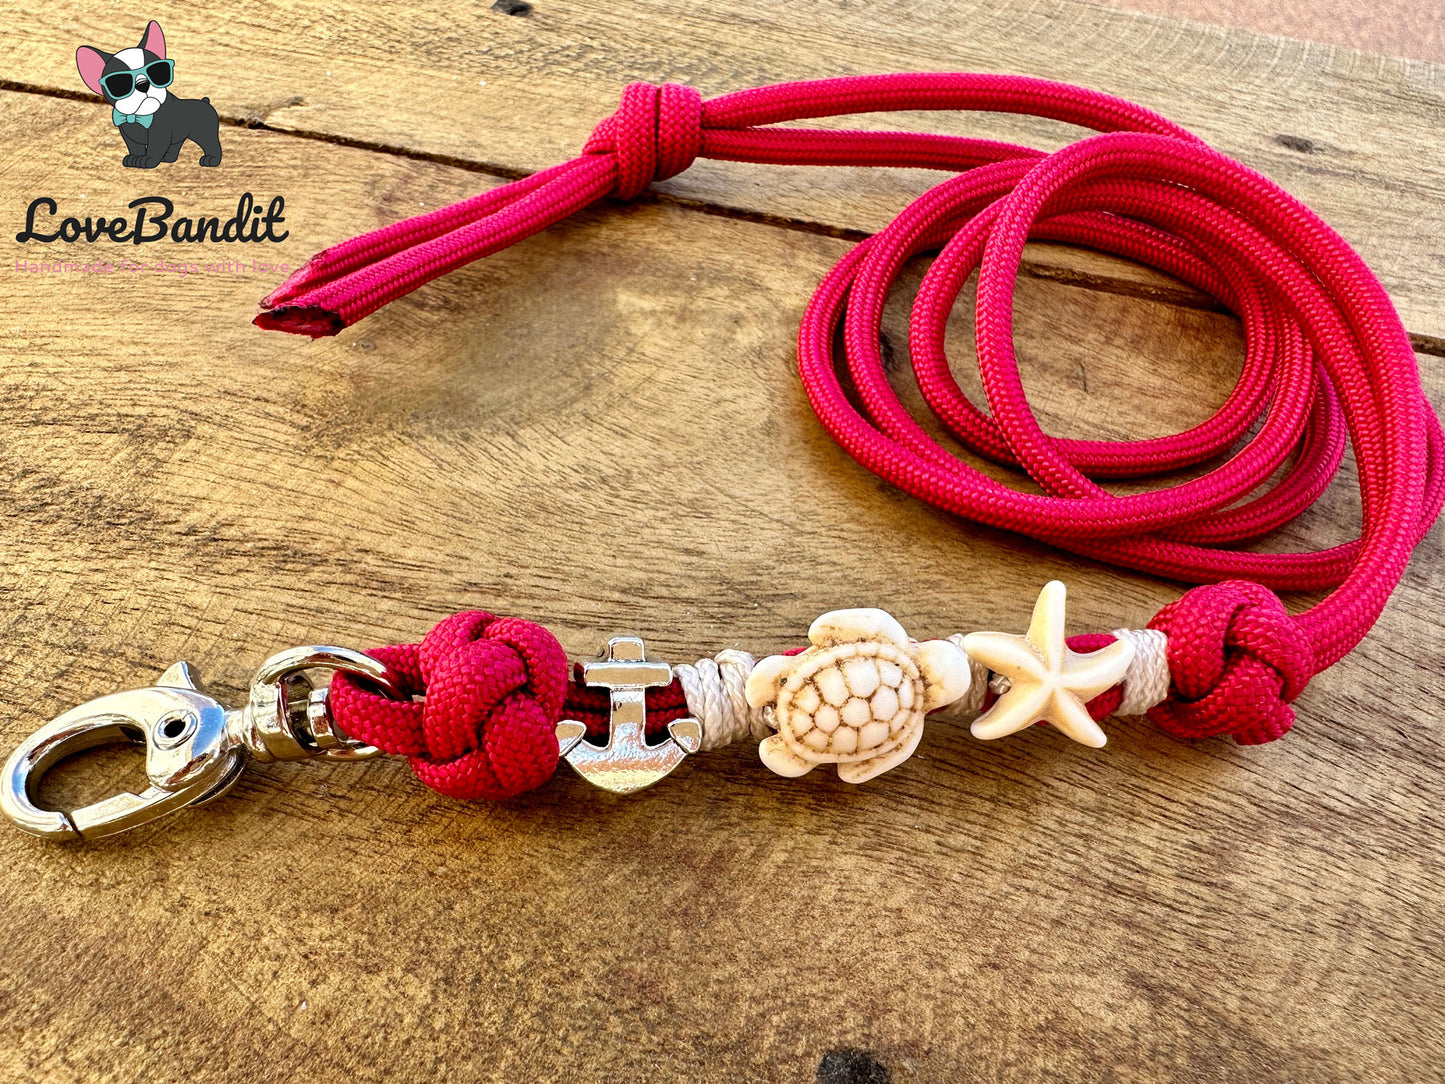 Hundepfeifenband "Meerliebe" aus Paracord - passend zu EM Keramik Halsband Lovebandit